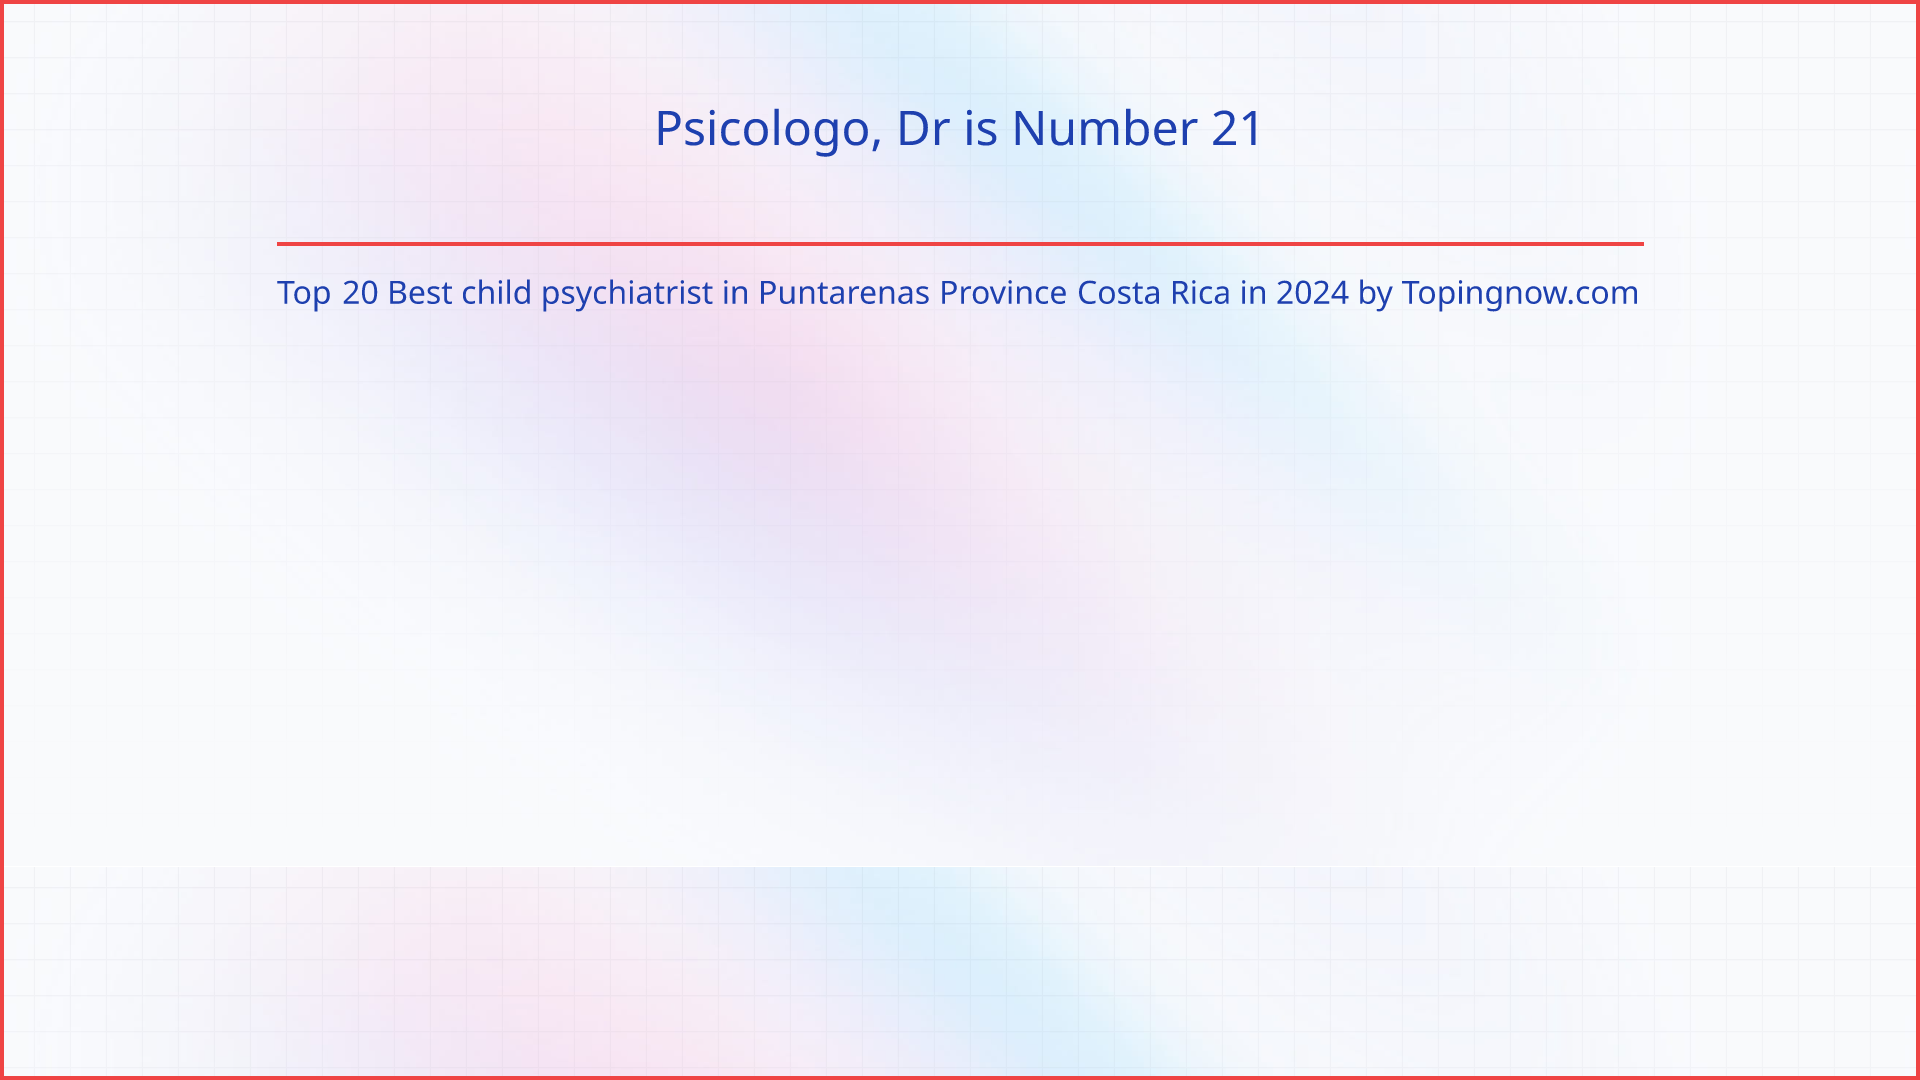 Psicologo, Dr: Top 20 Best child psychiatrist in Puntarenas Province Costa Rica in 2024